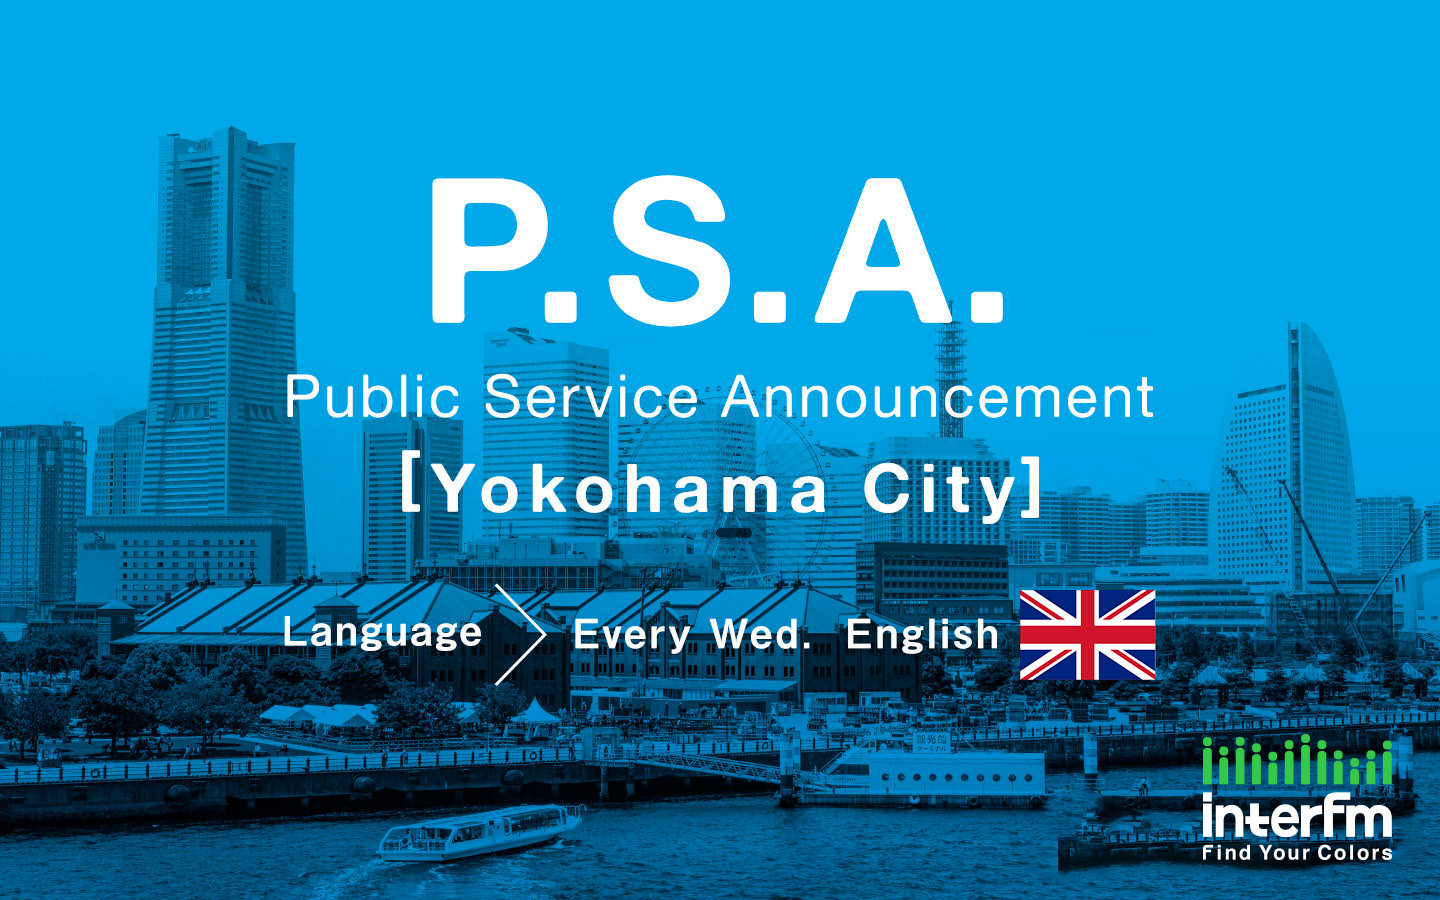 Public Service Announcement - Yokohama City (English)